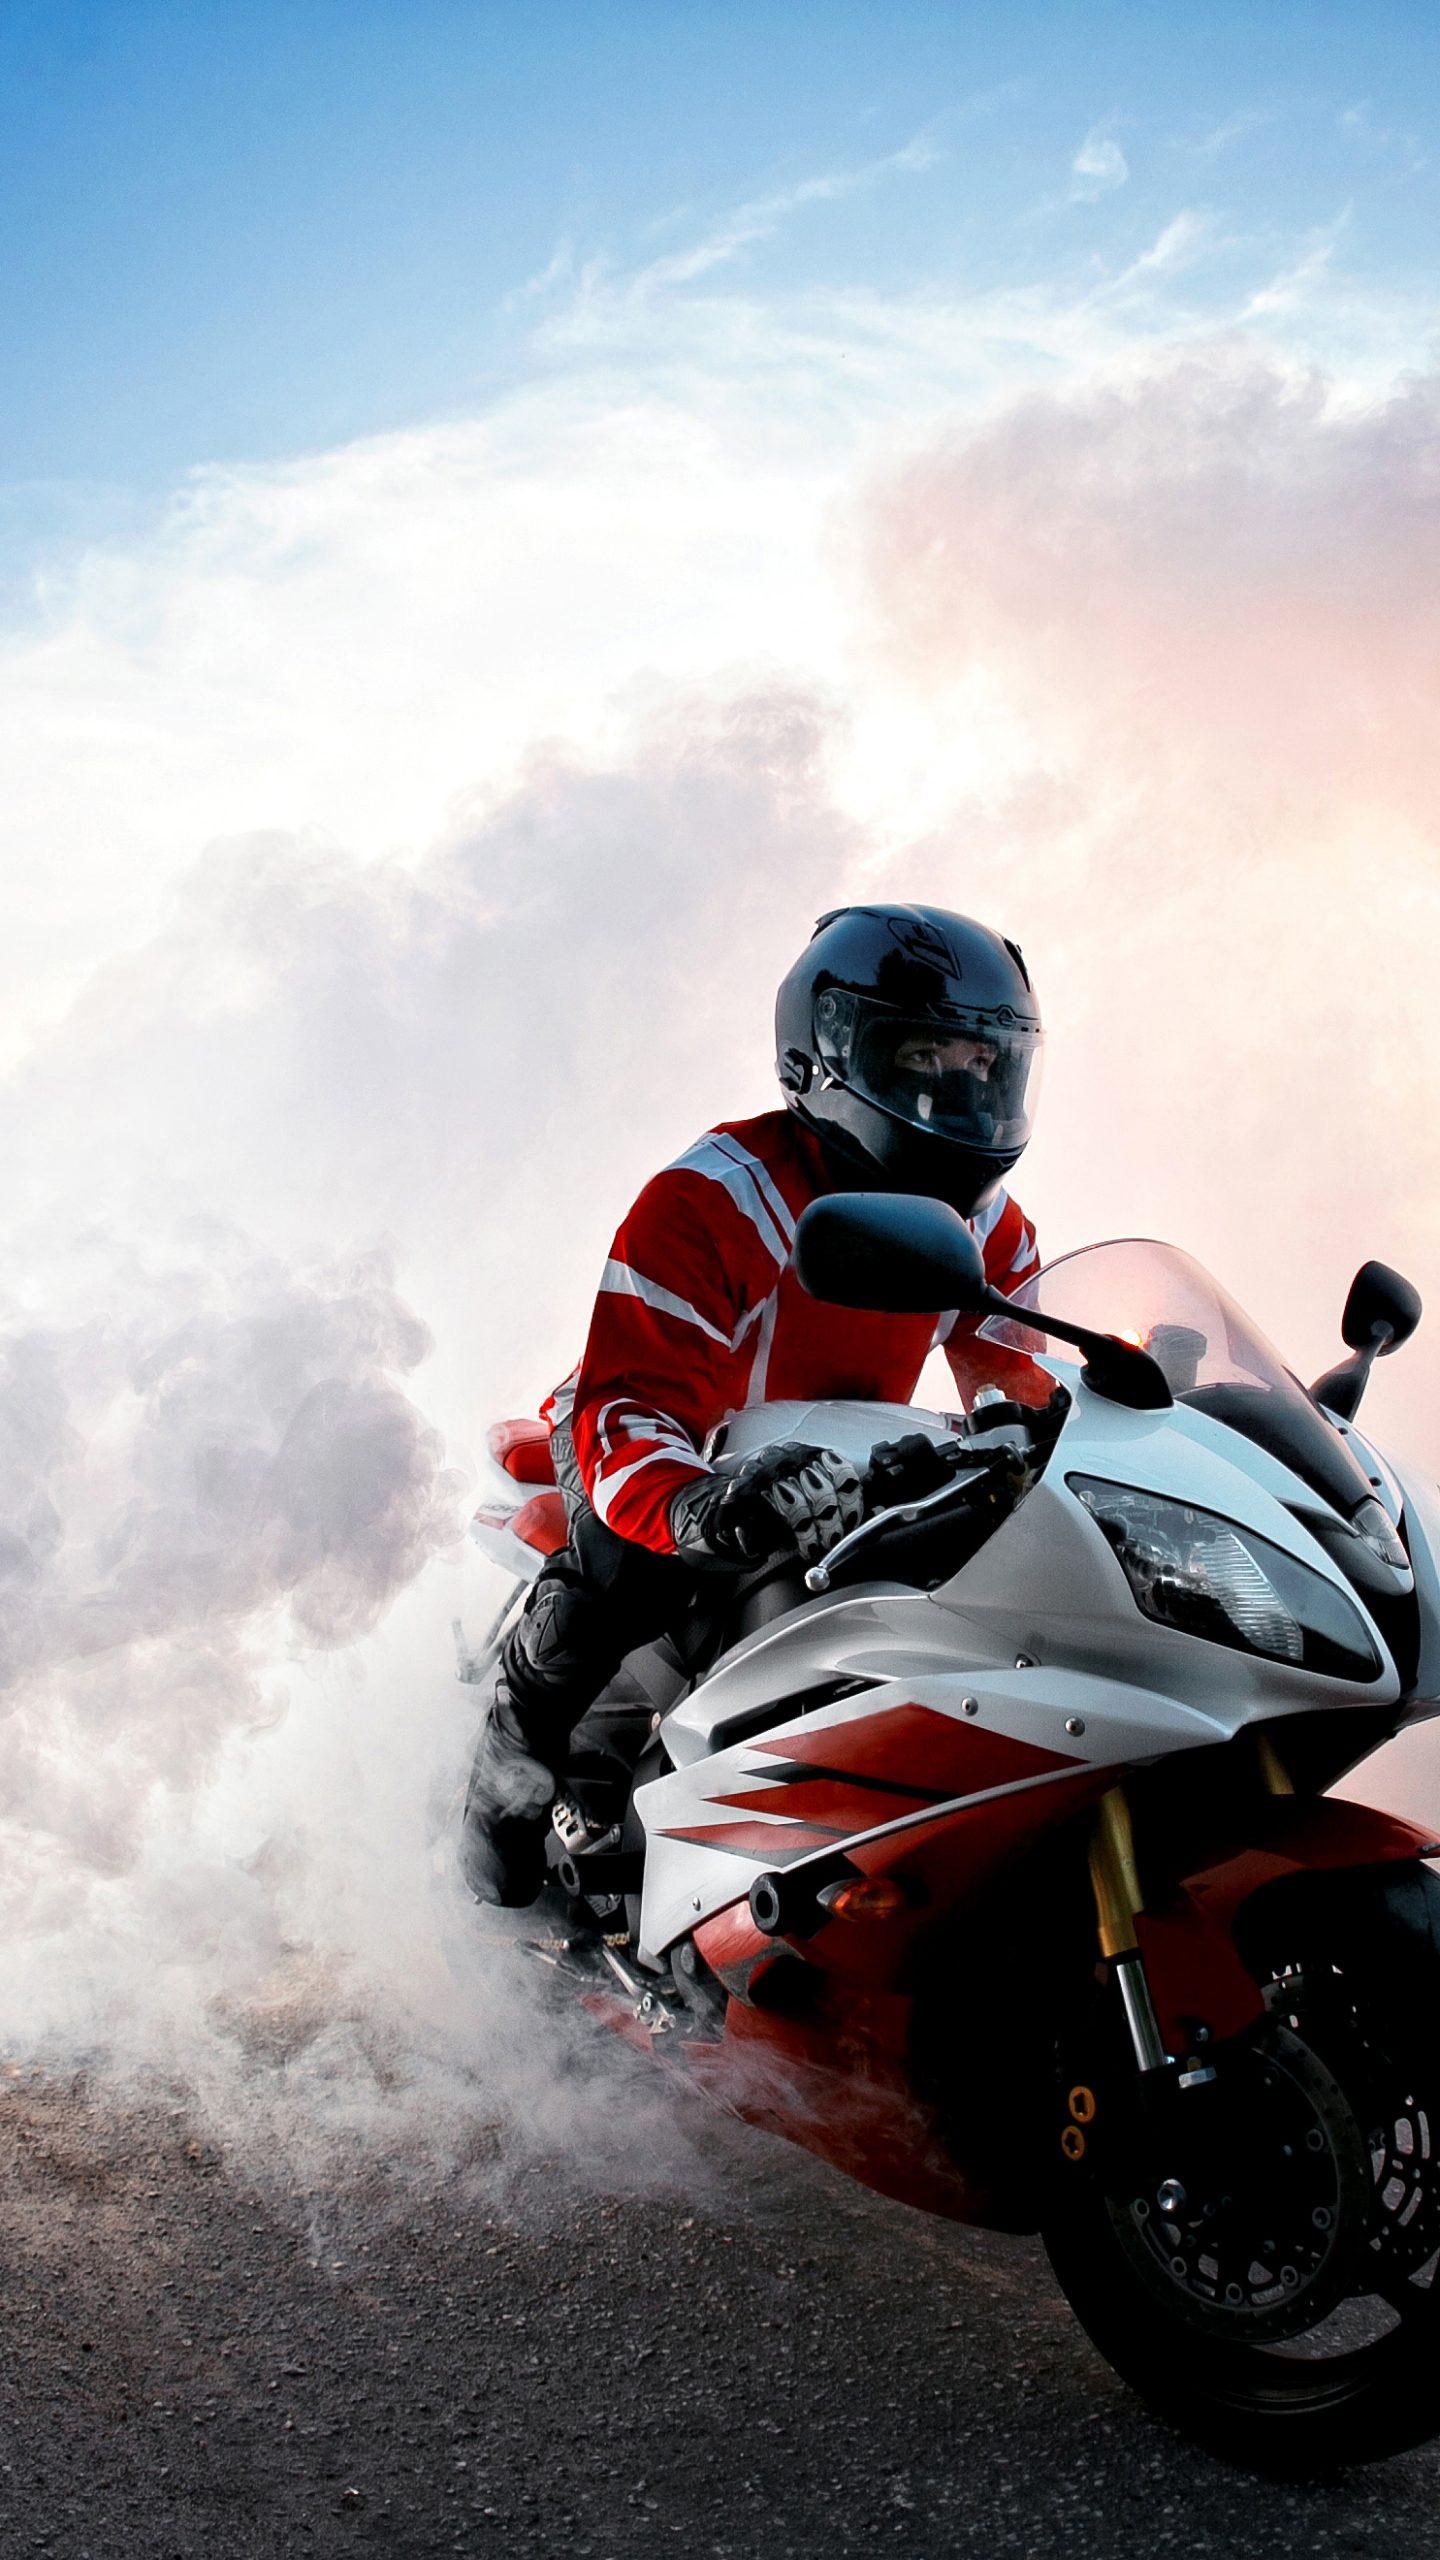 fond d'écran de moto,véhicule,faire de la moto,moto,superbike racing,motoneige